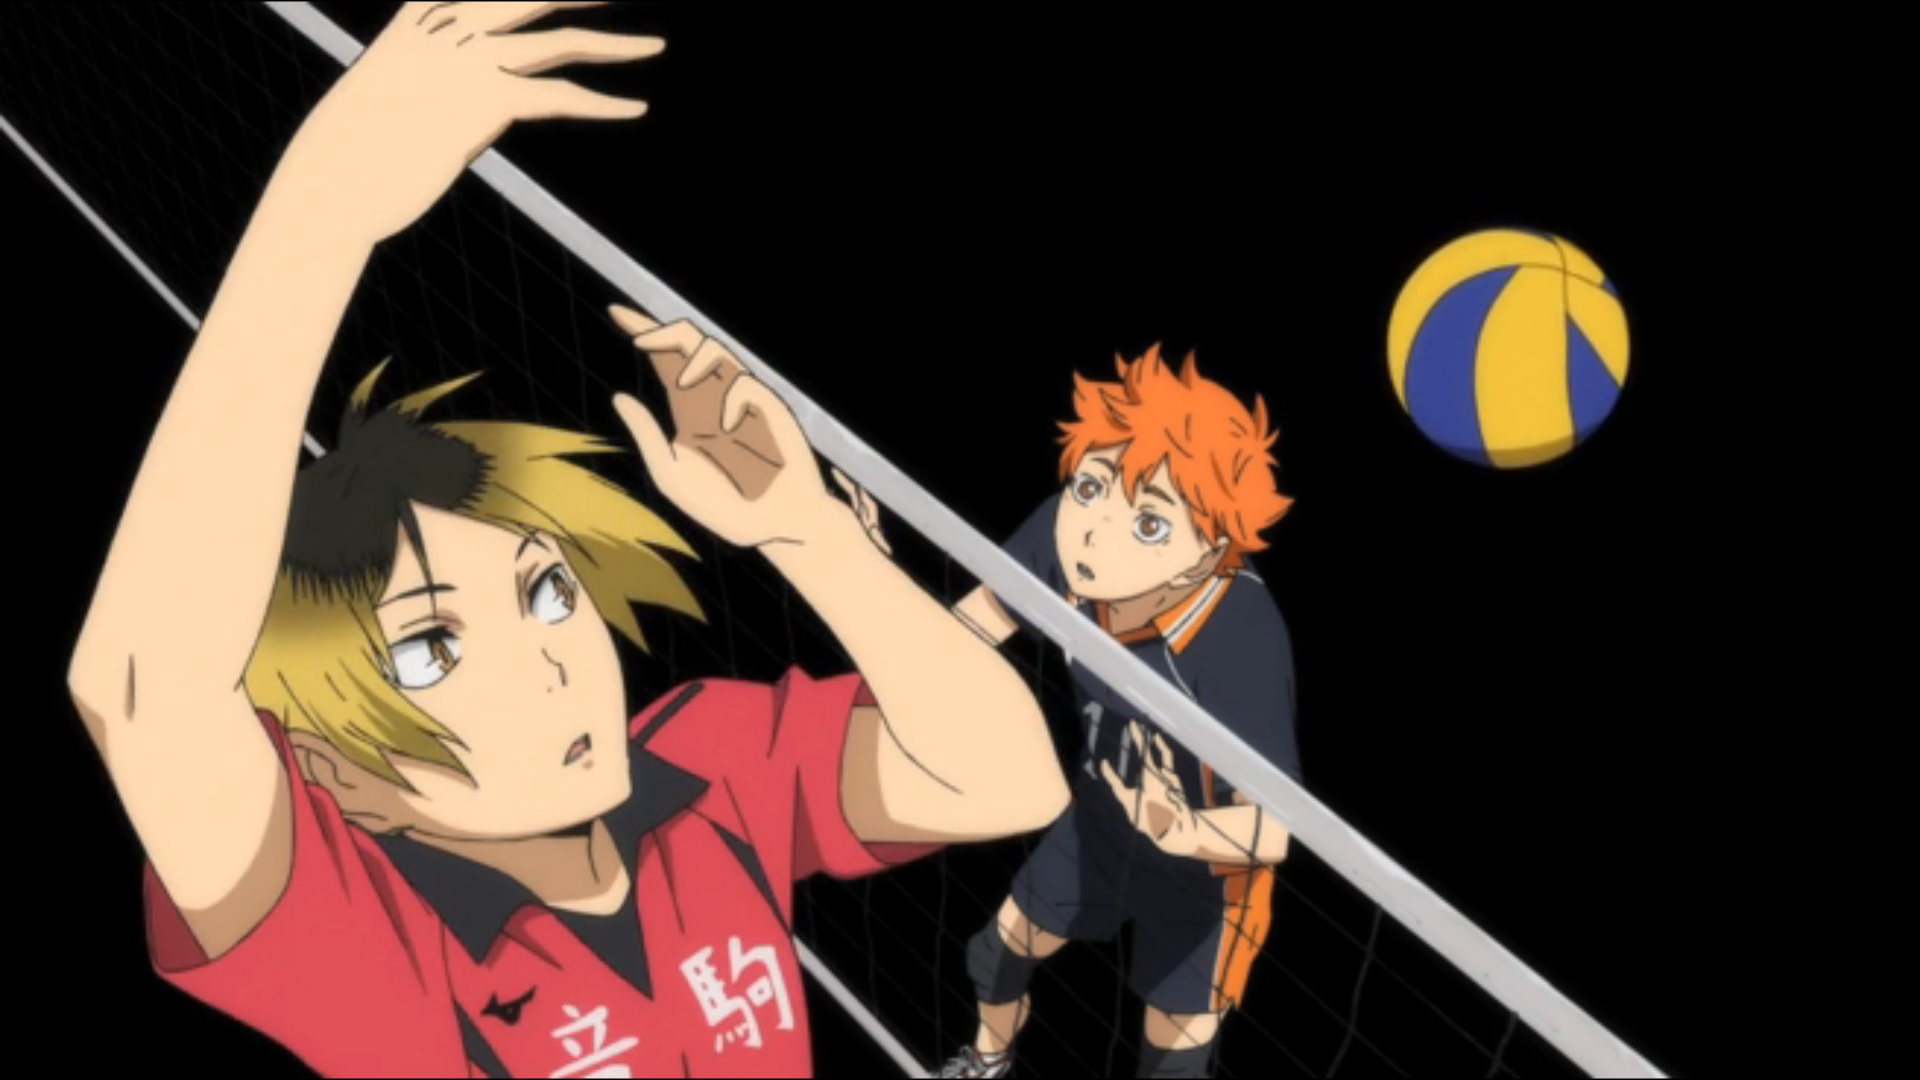 Buy Haikyuu message sheet Karasuno B Volleyball Anime Online at